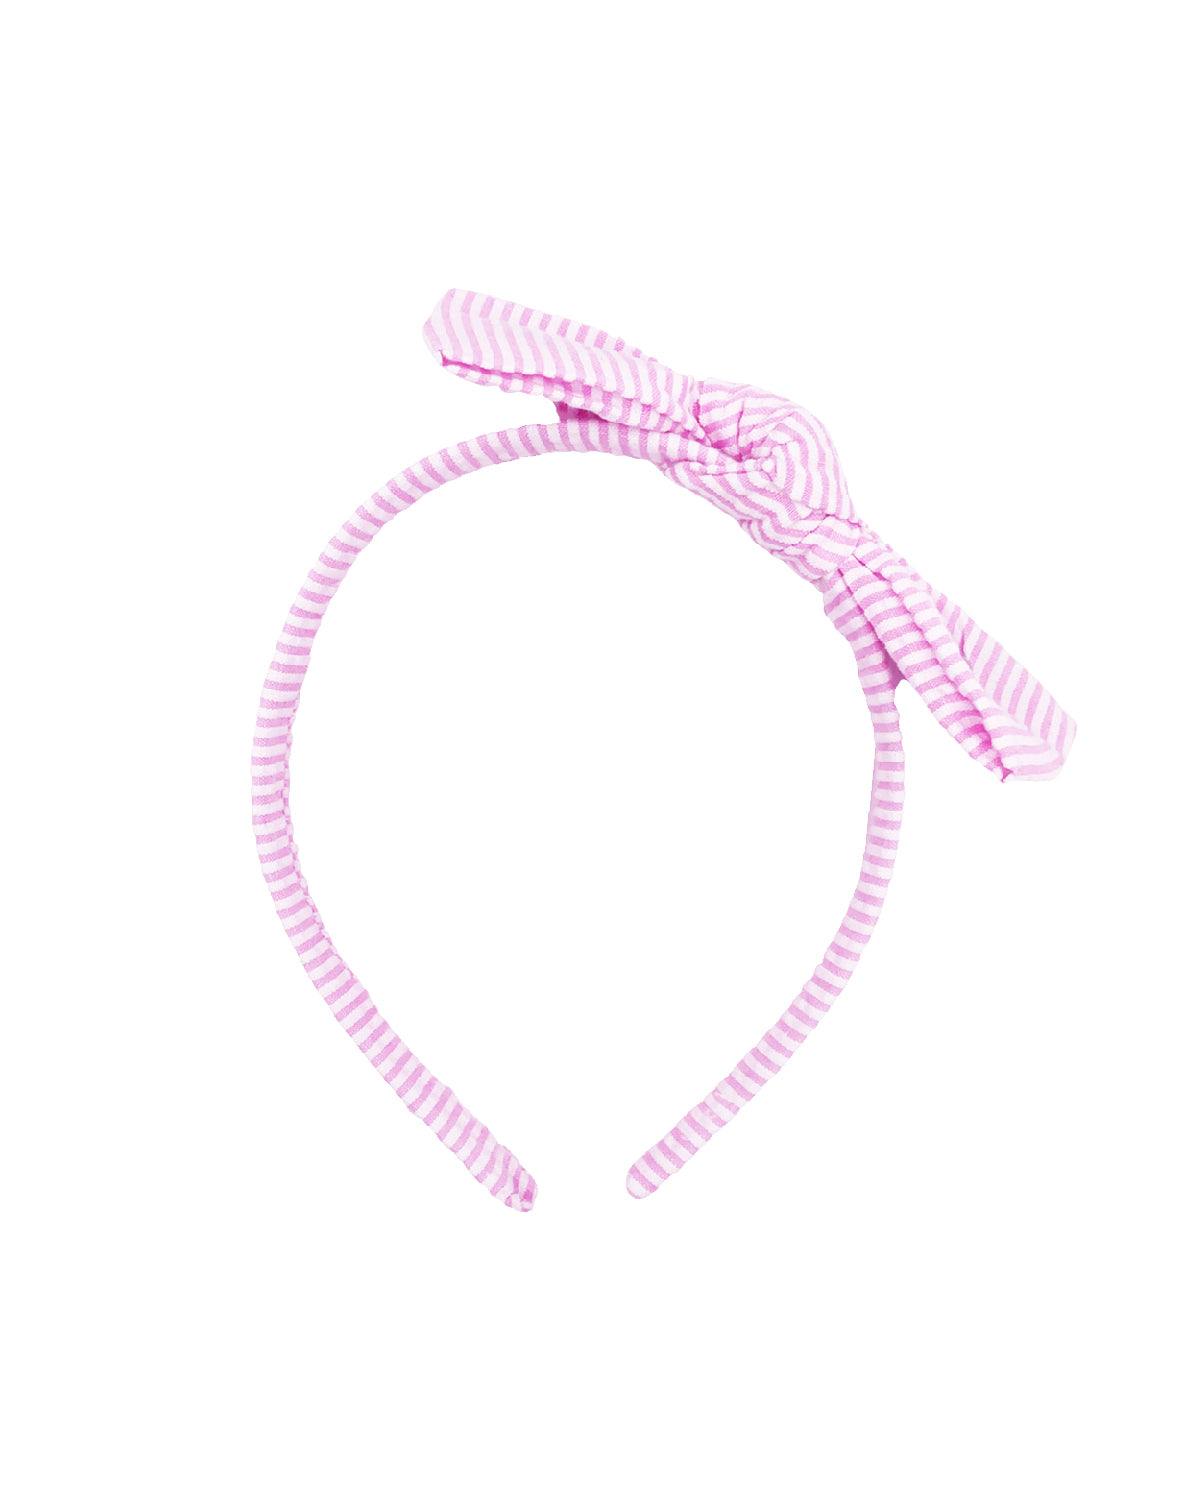 Seersucker Bow Headband in Pink/White